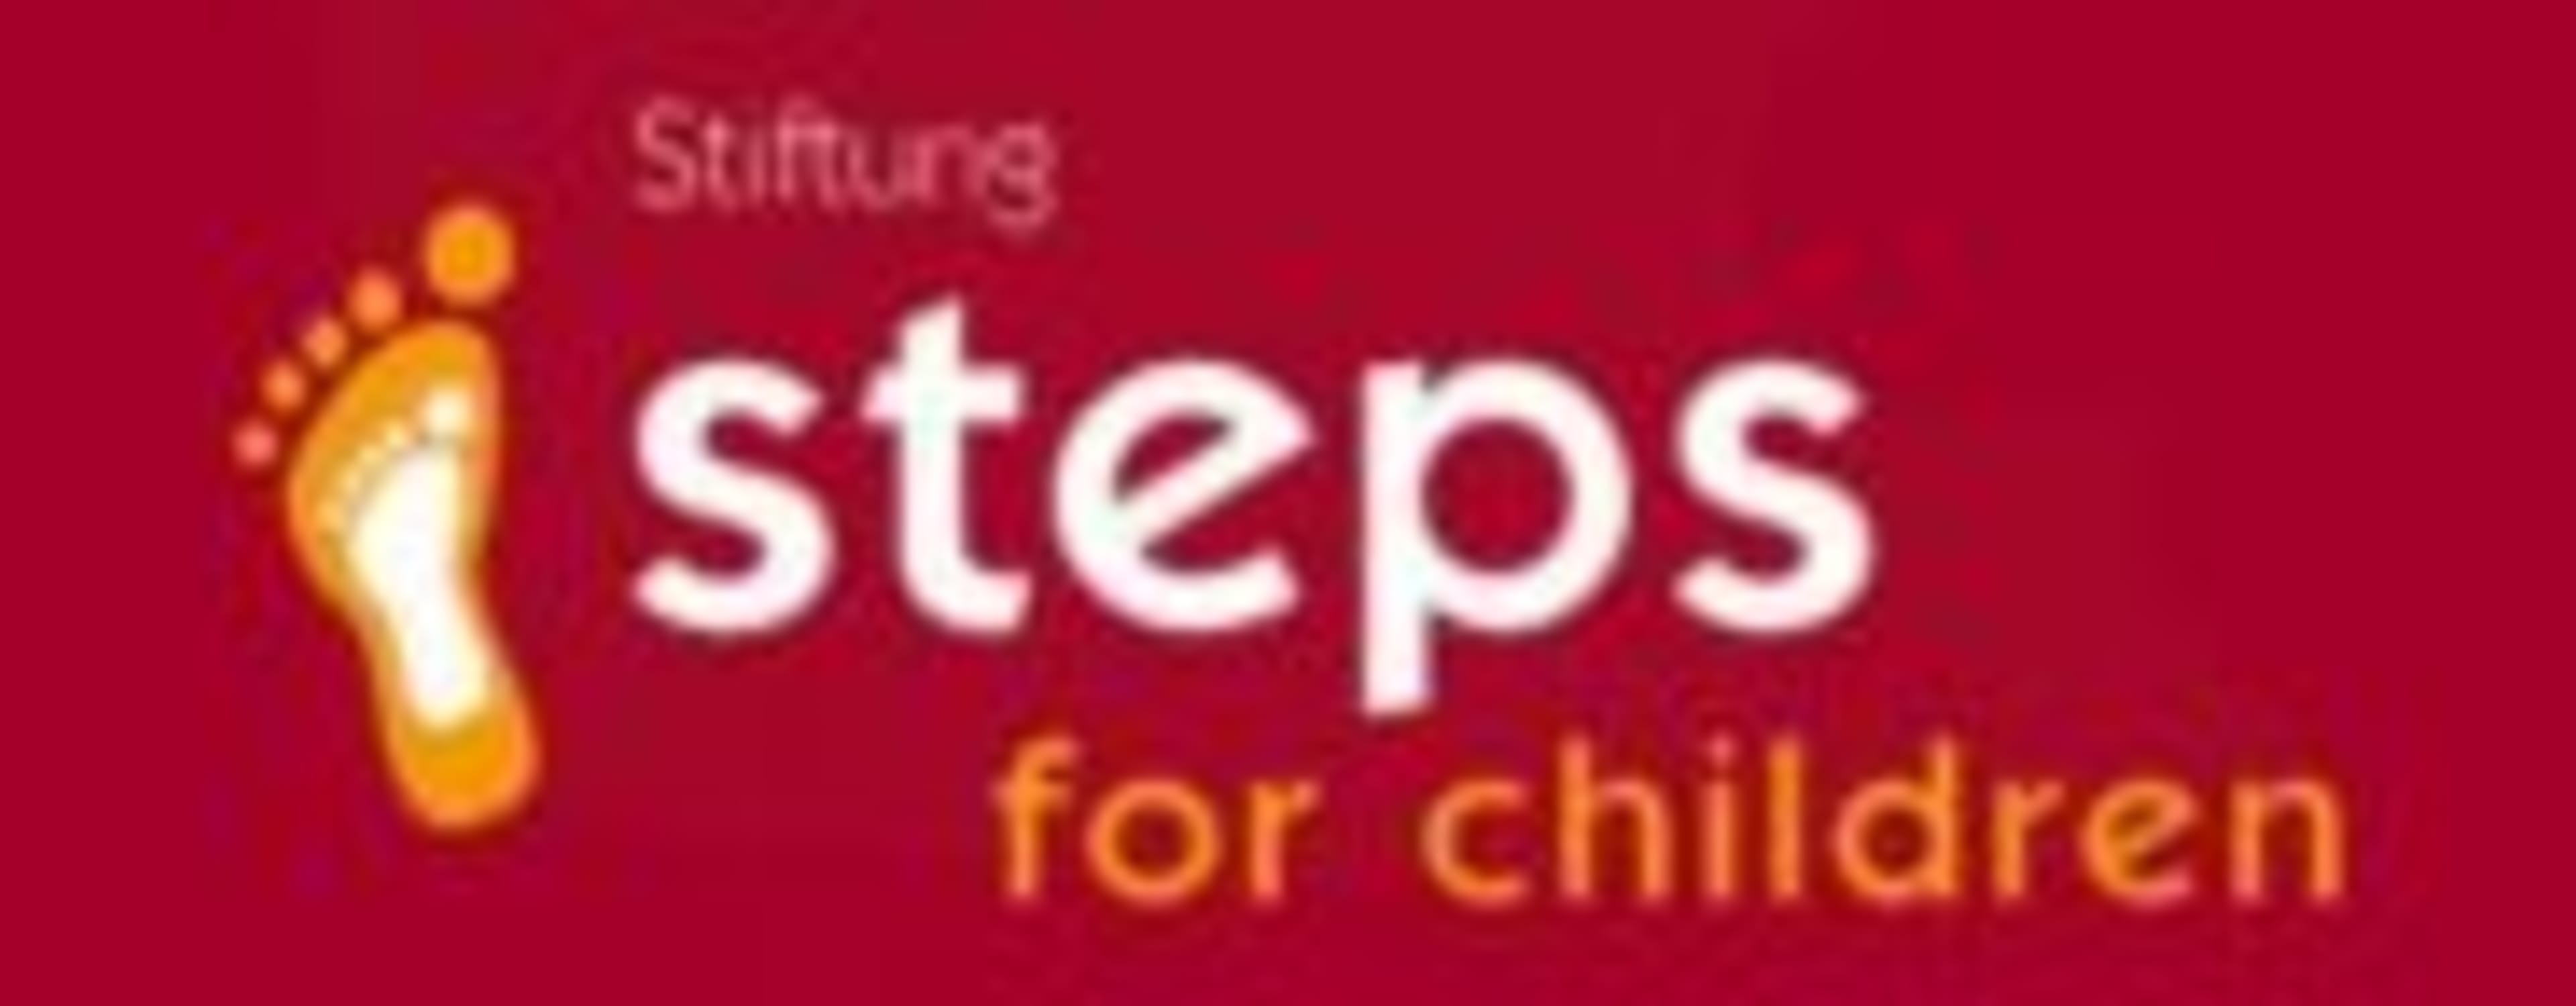 Stiftung steps for children logo